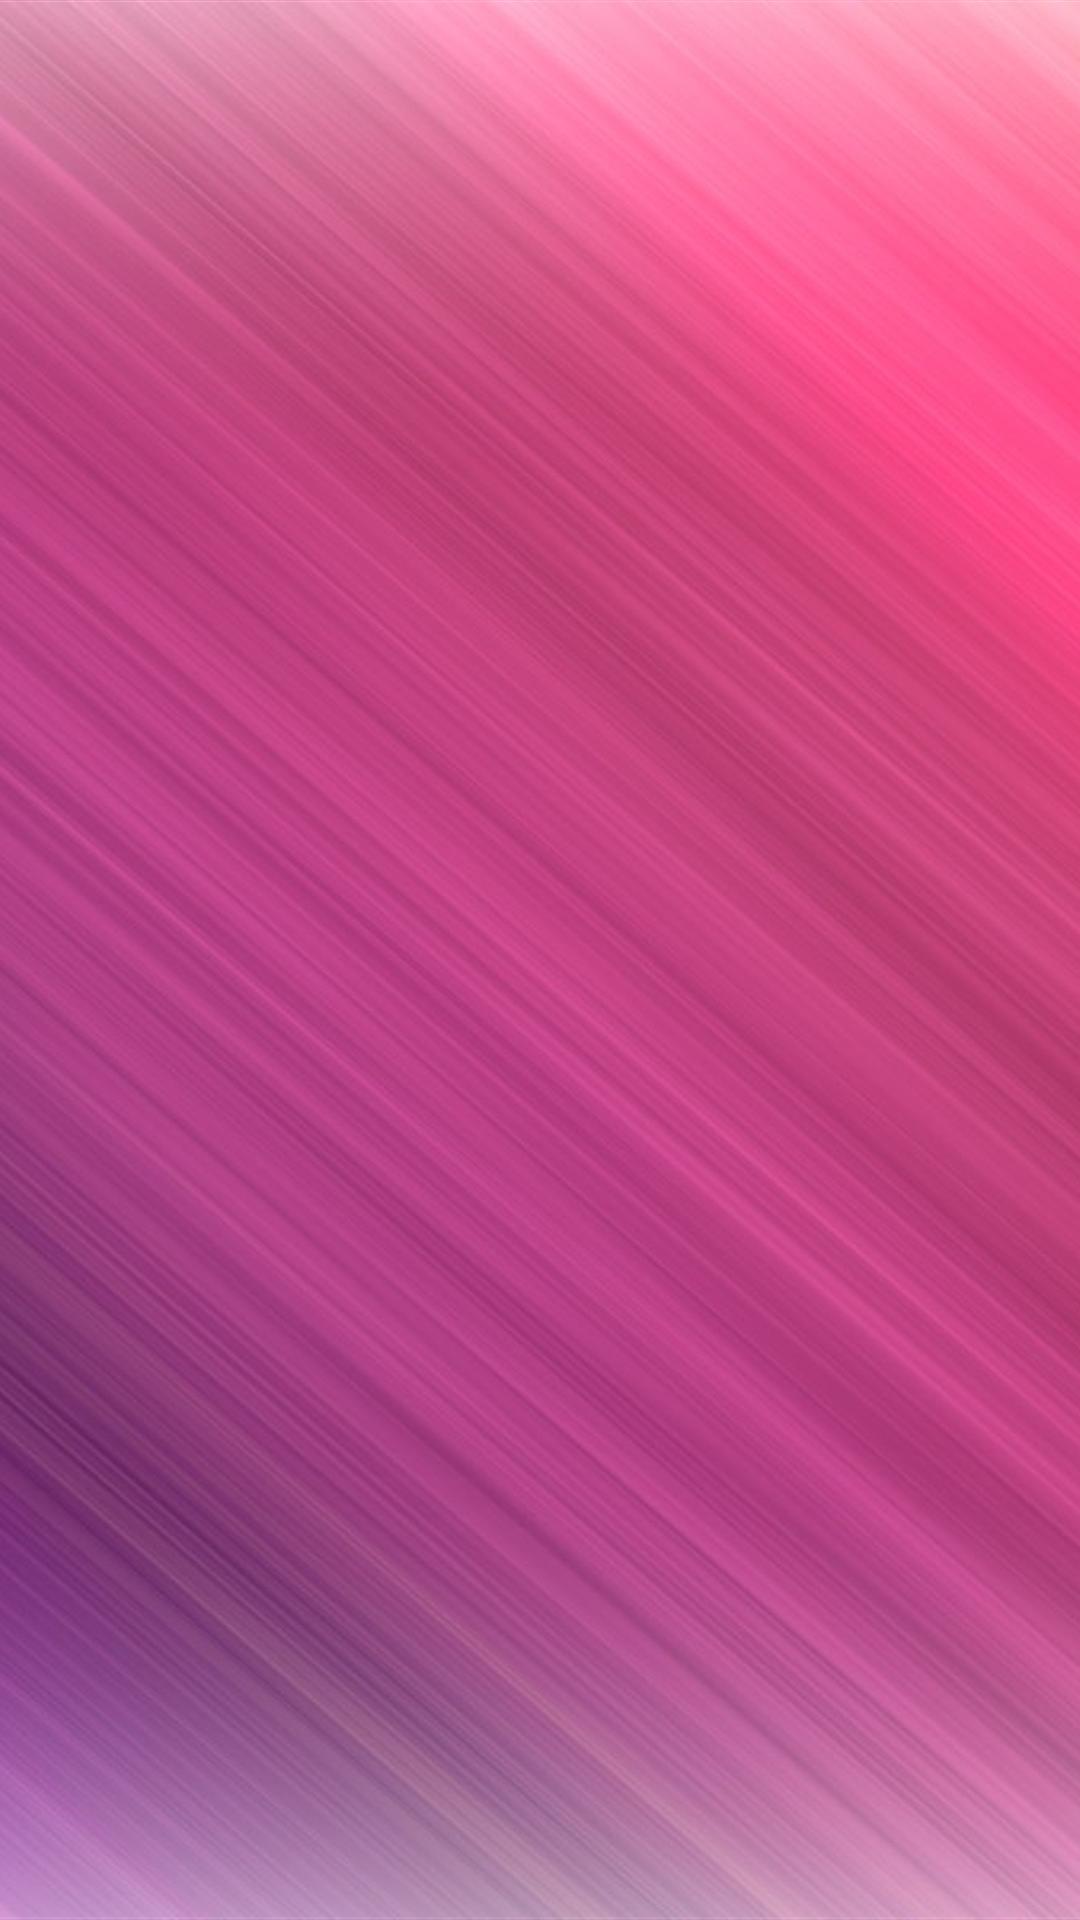 fond d'écran rose iphone,rose,violet,violet,rouge,lilas